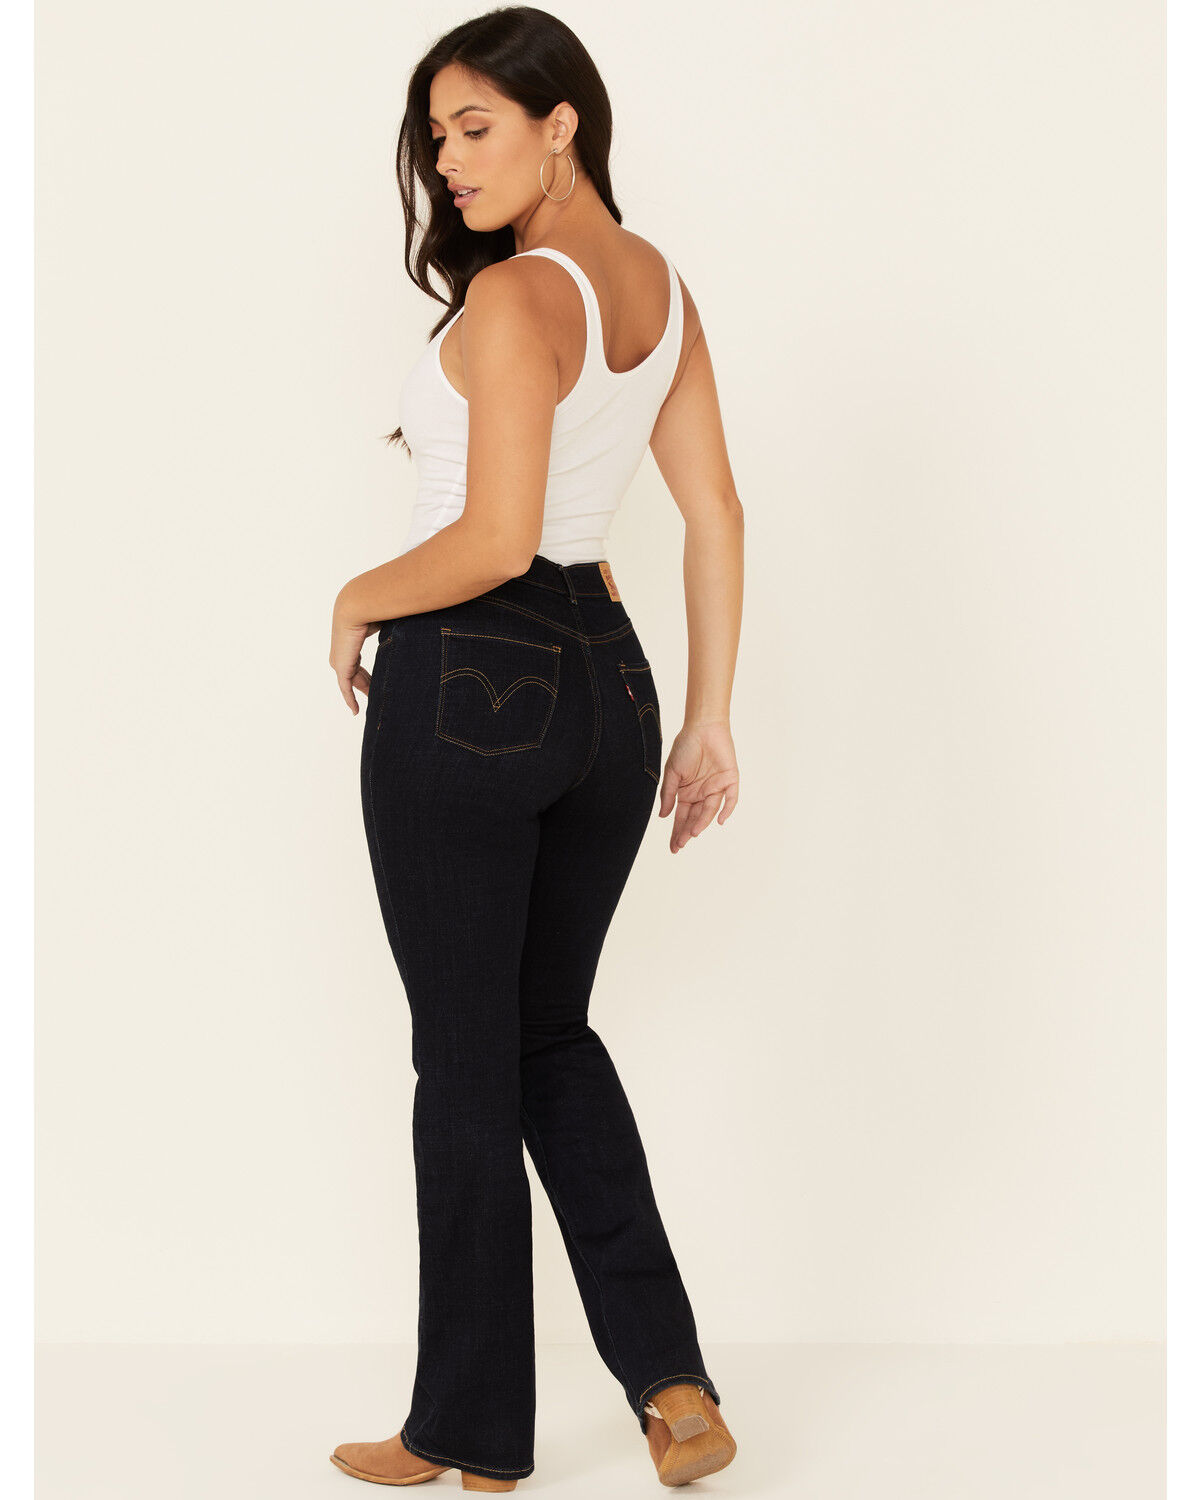 levi's women's classic bootcut jeans